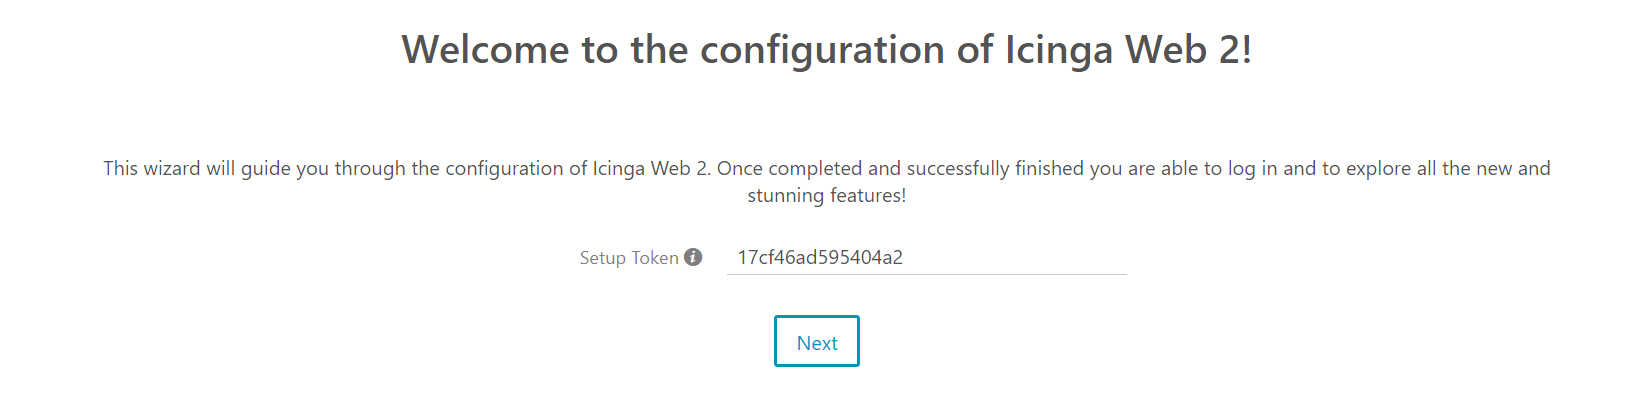 configuration of Icinga Web 2